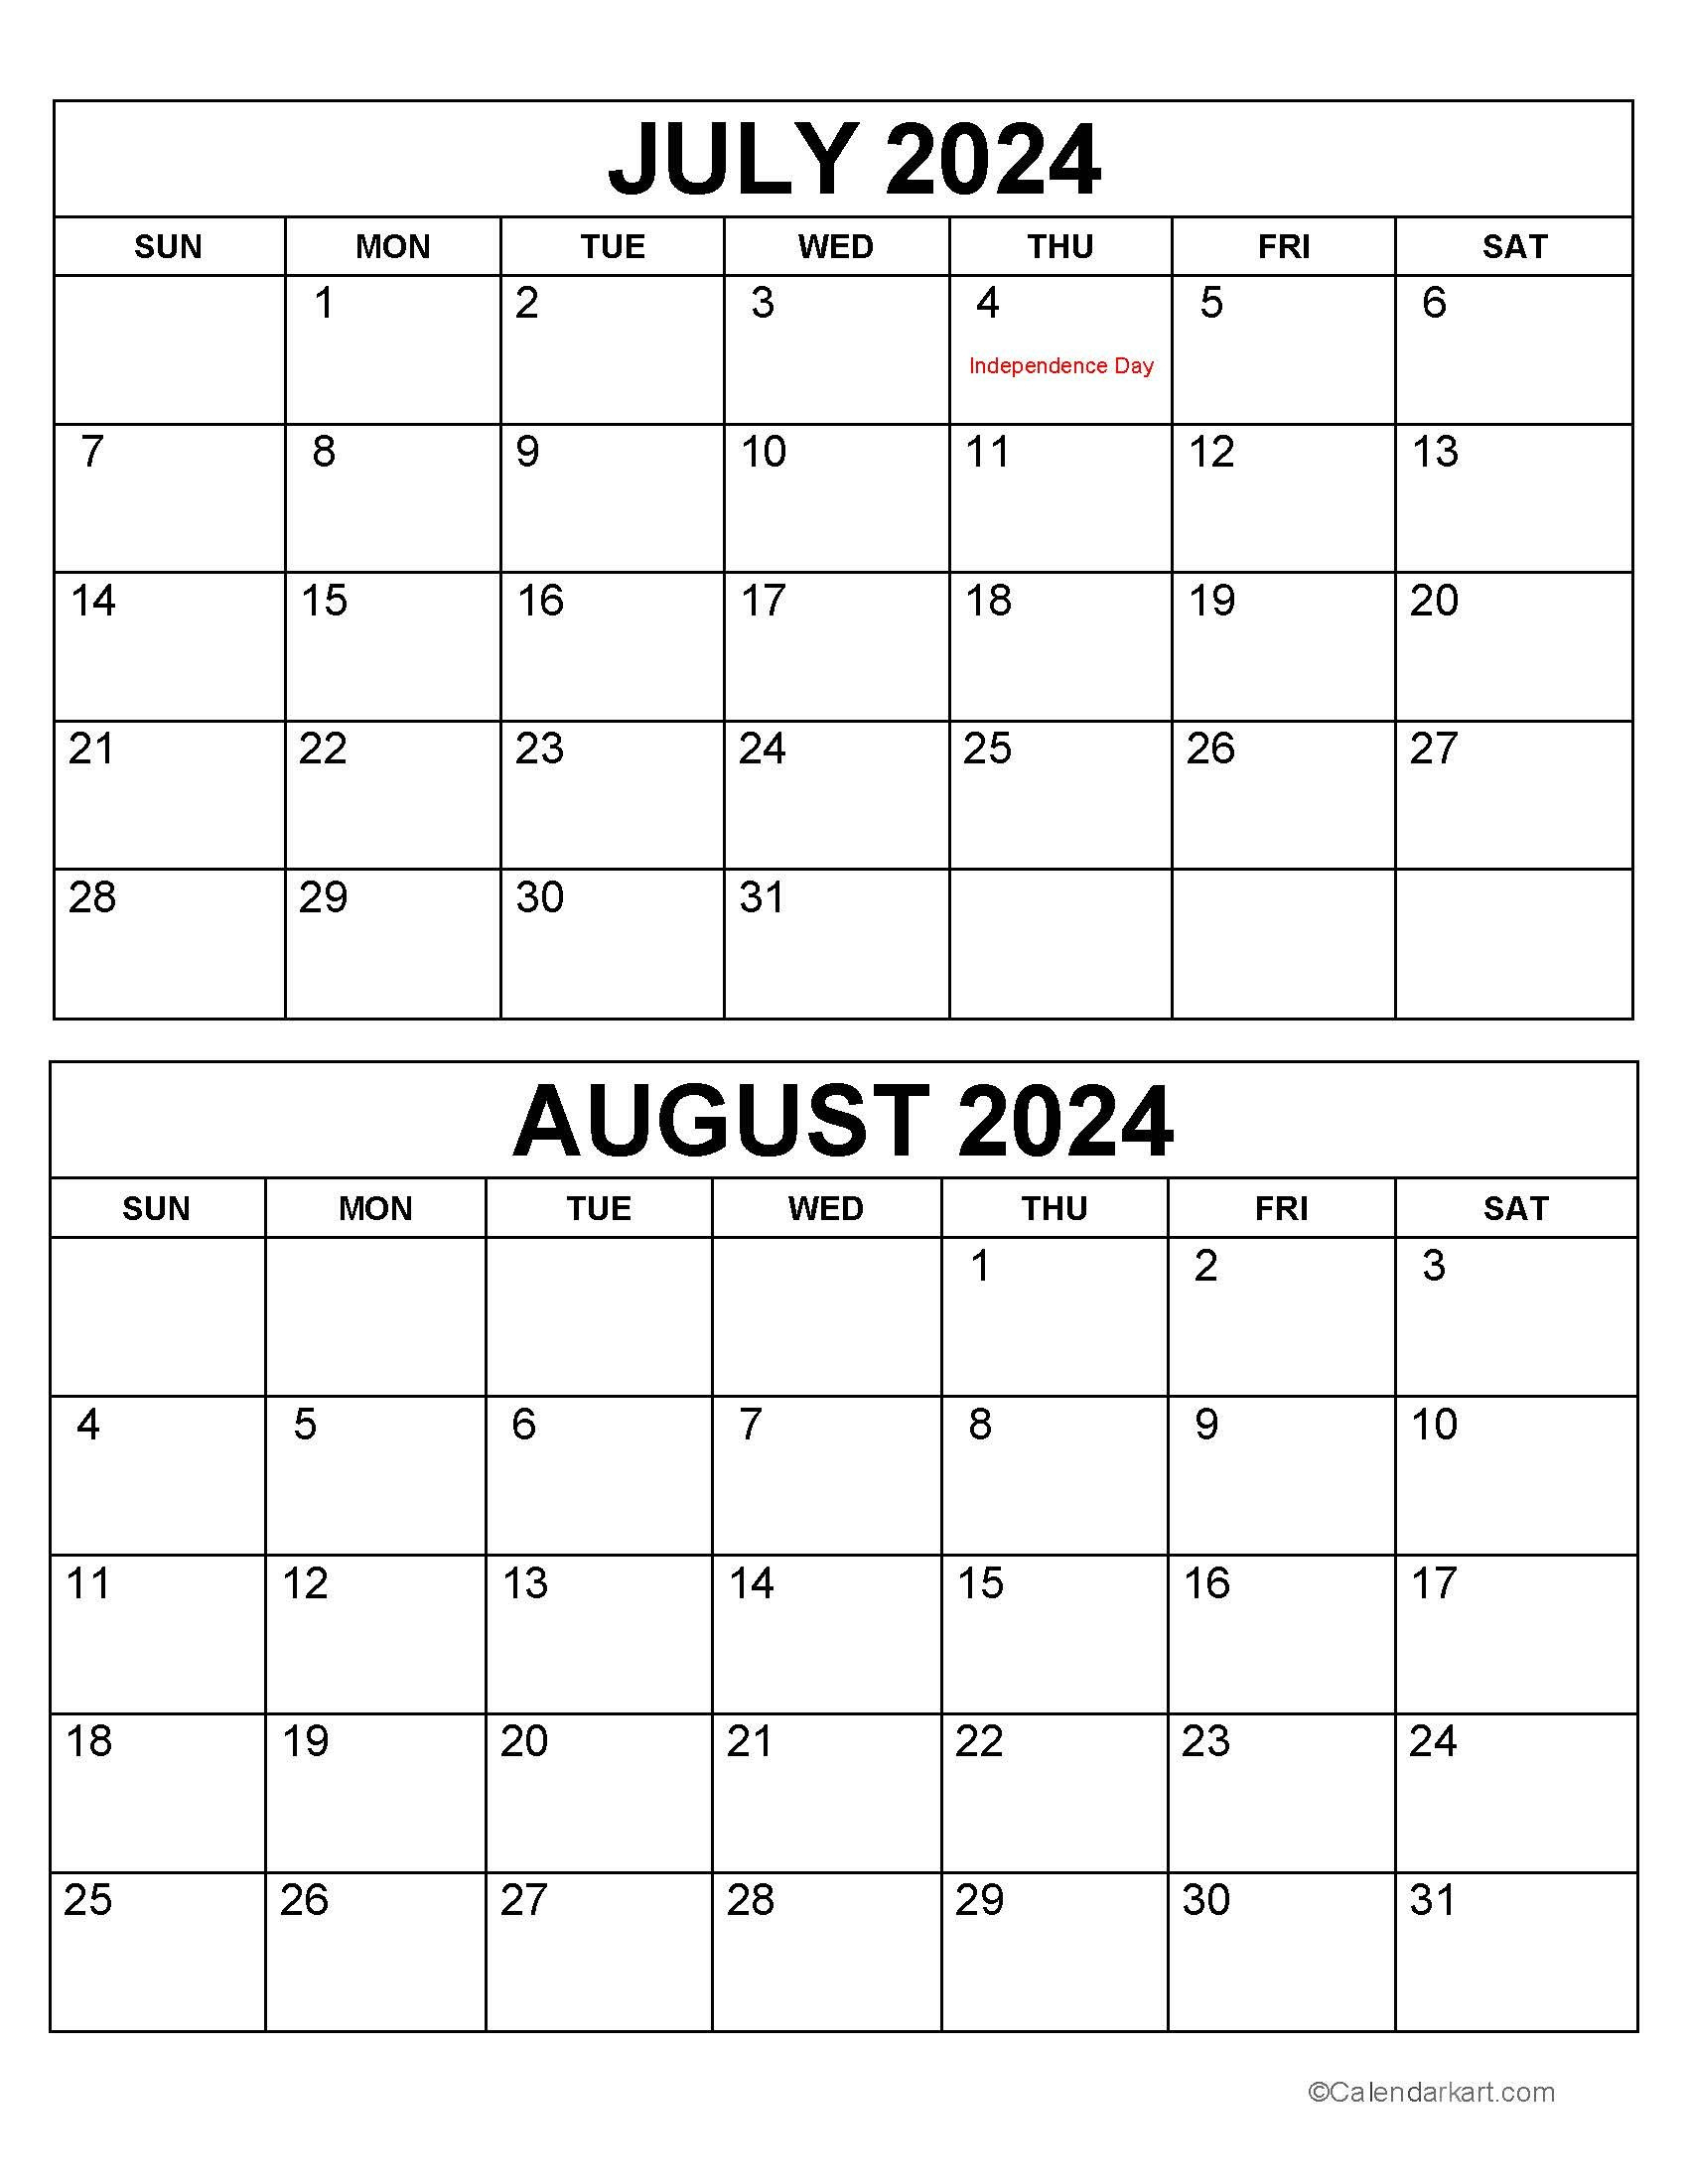 Printable July August 2024 Calendar | Calendarkart within July Through August 2024 Calendar